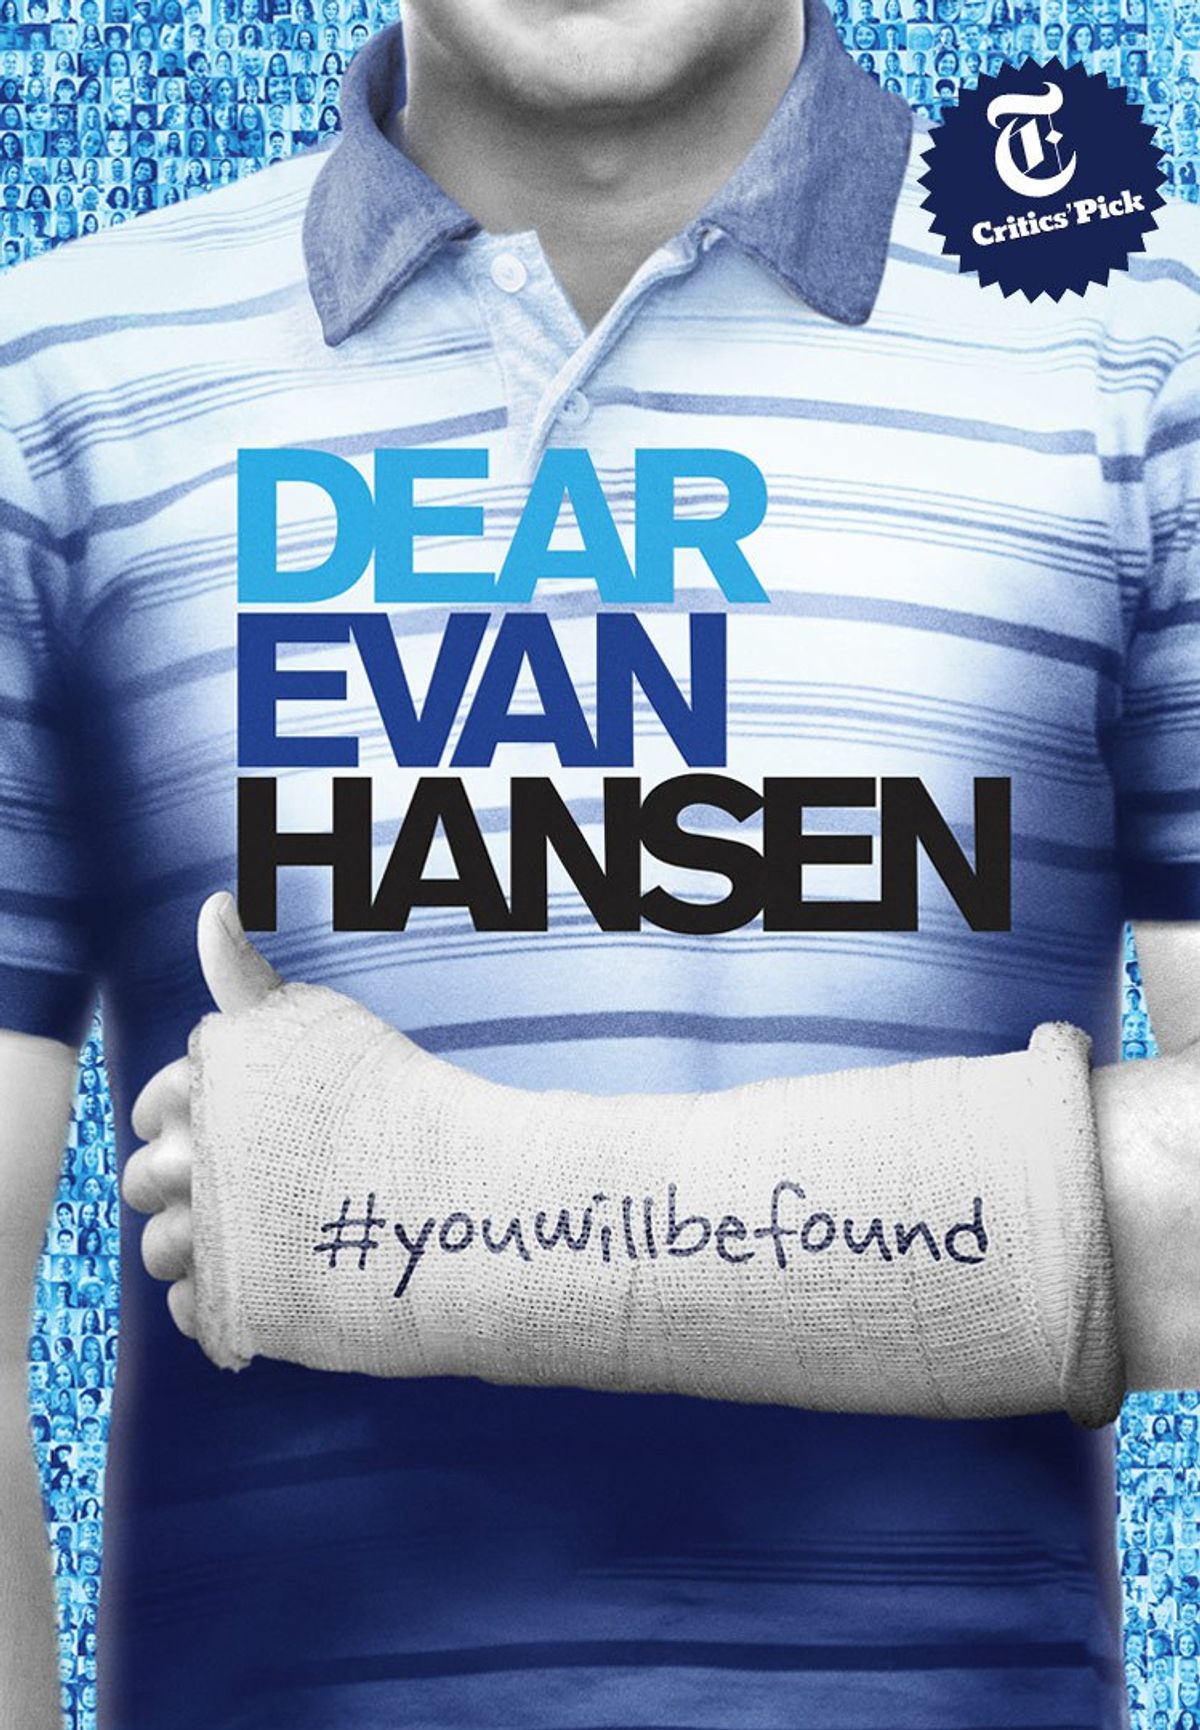 A Review On Dear Evan Hansen